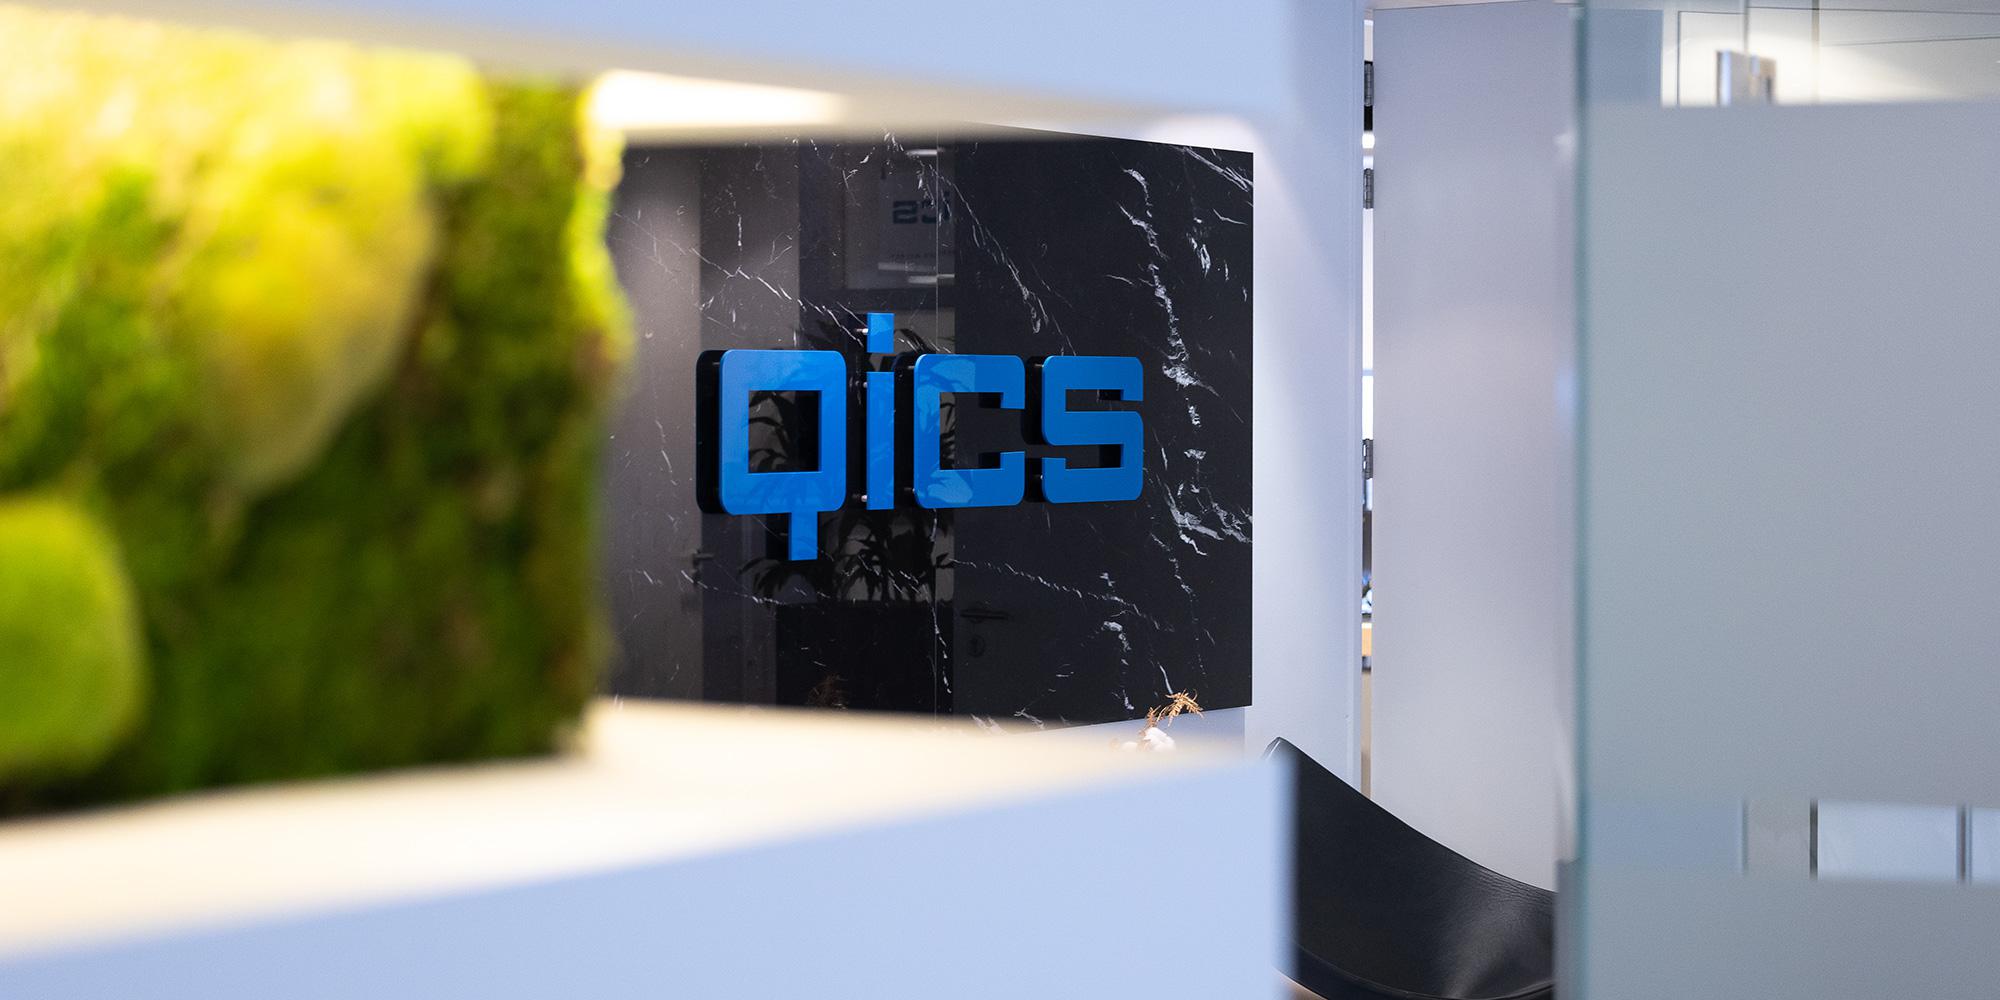 Qics' leap forward. A new era in project management